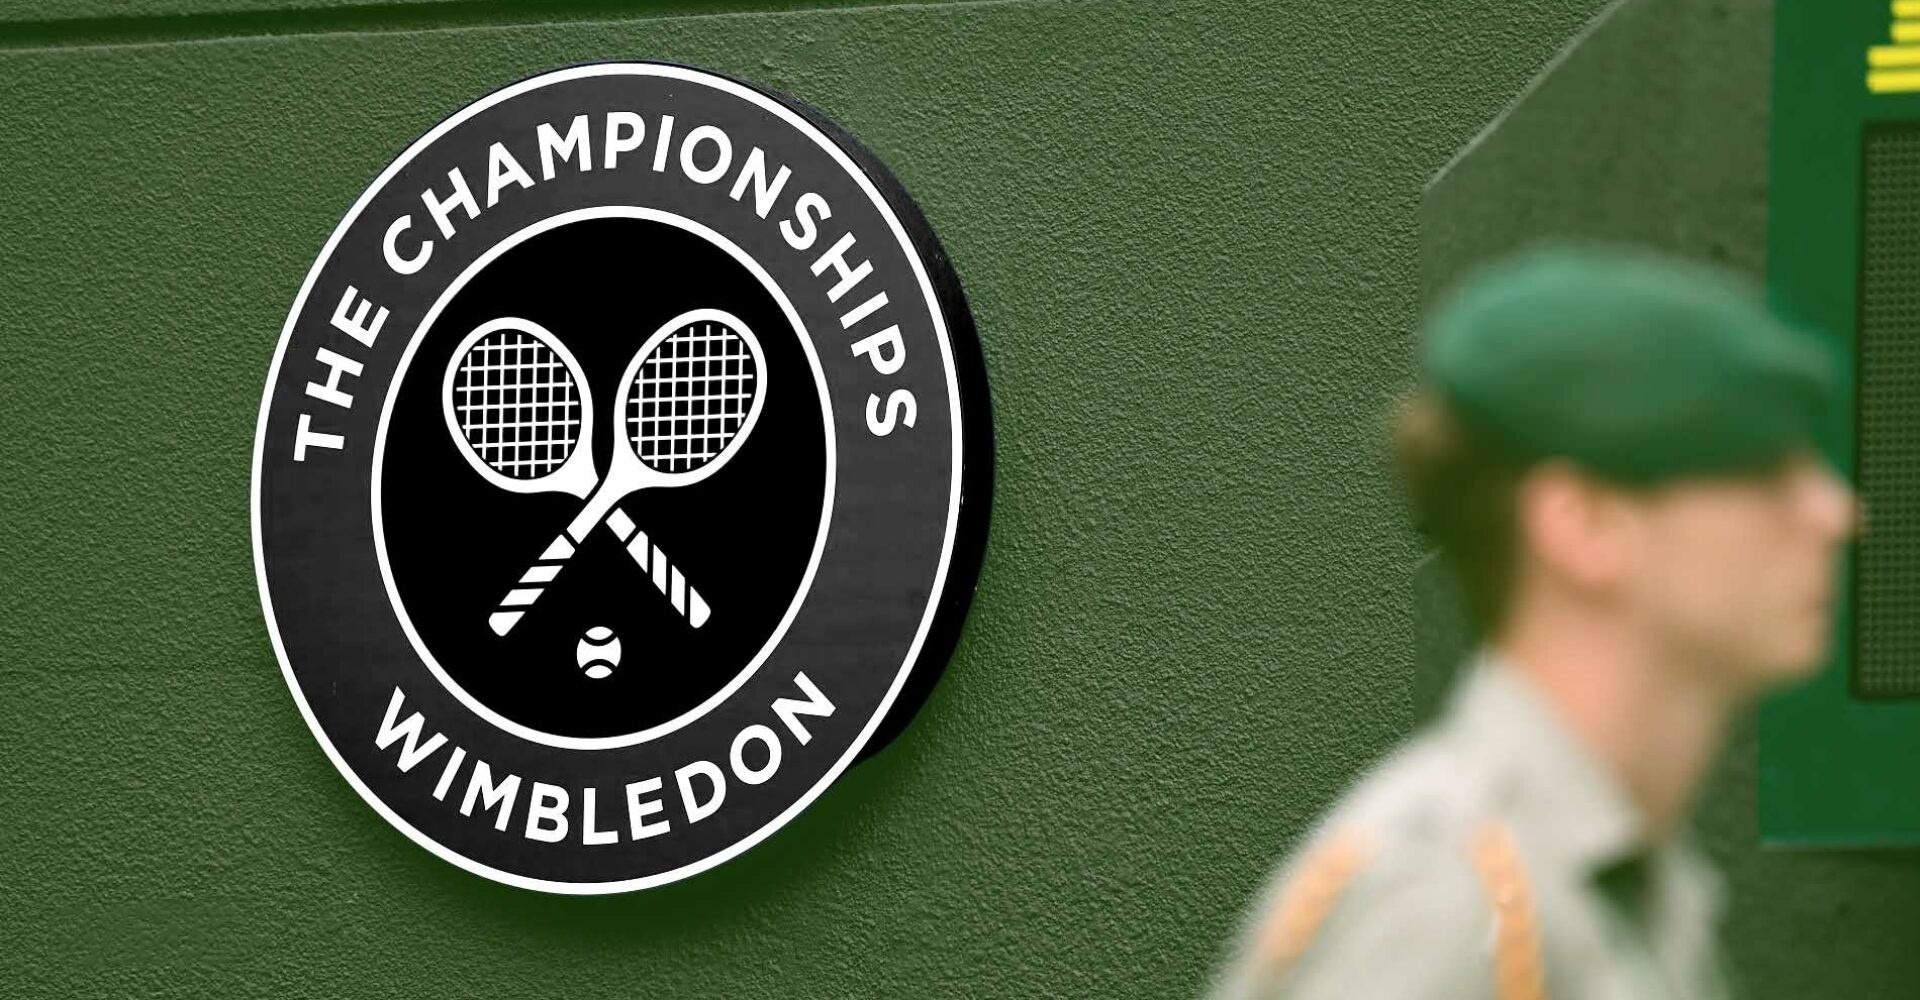 Wimbledon announced equal prize money Tennis Majors